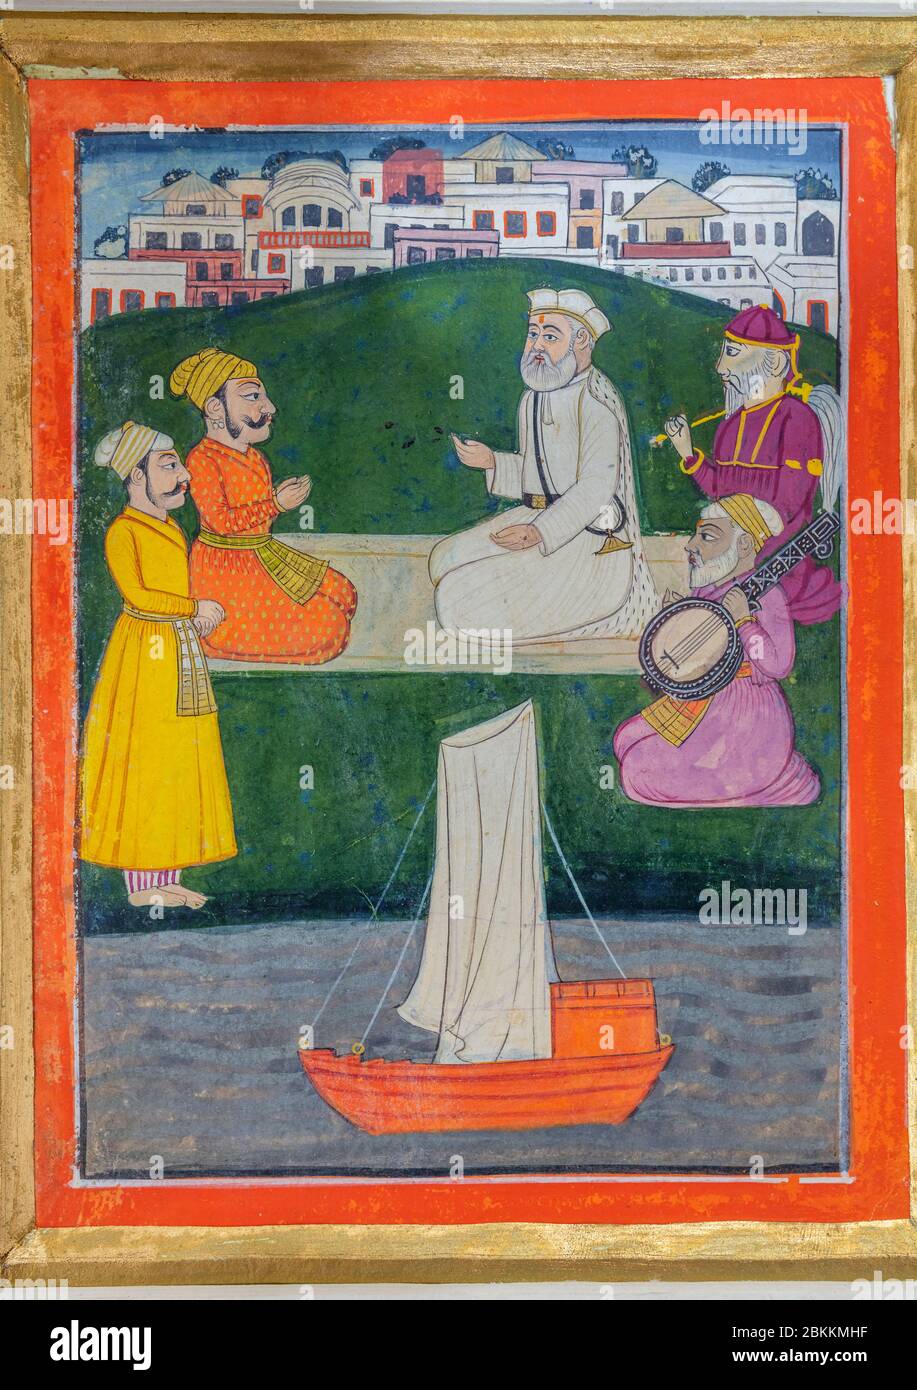 Guru Nanak giving sermon to two boat men, 1830s painting, Museum, Delhi, India Stock Photo